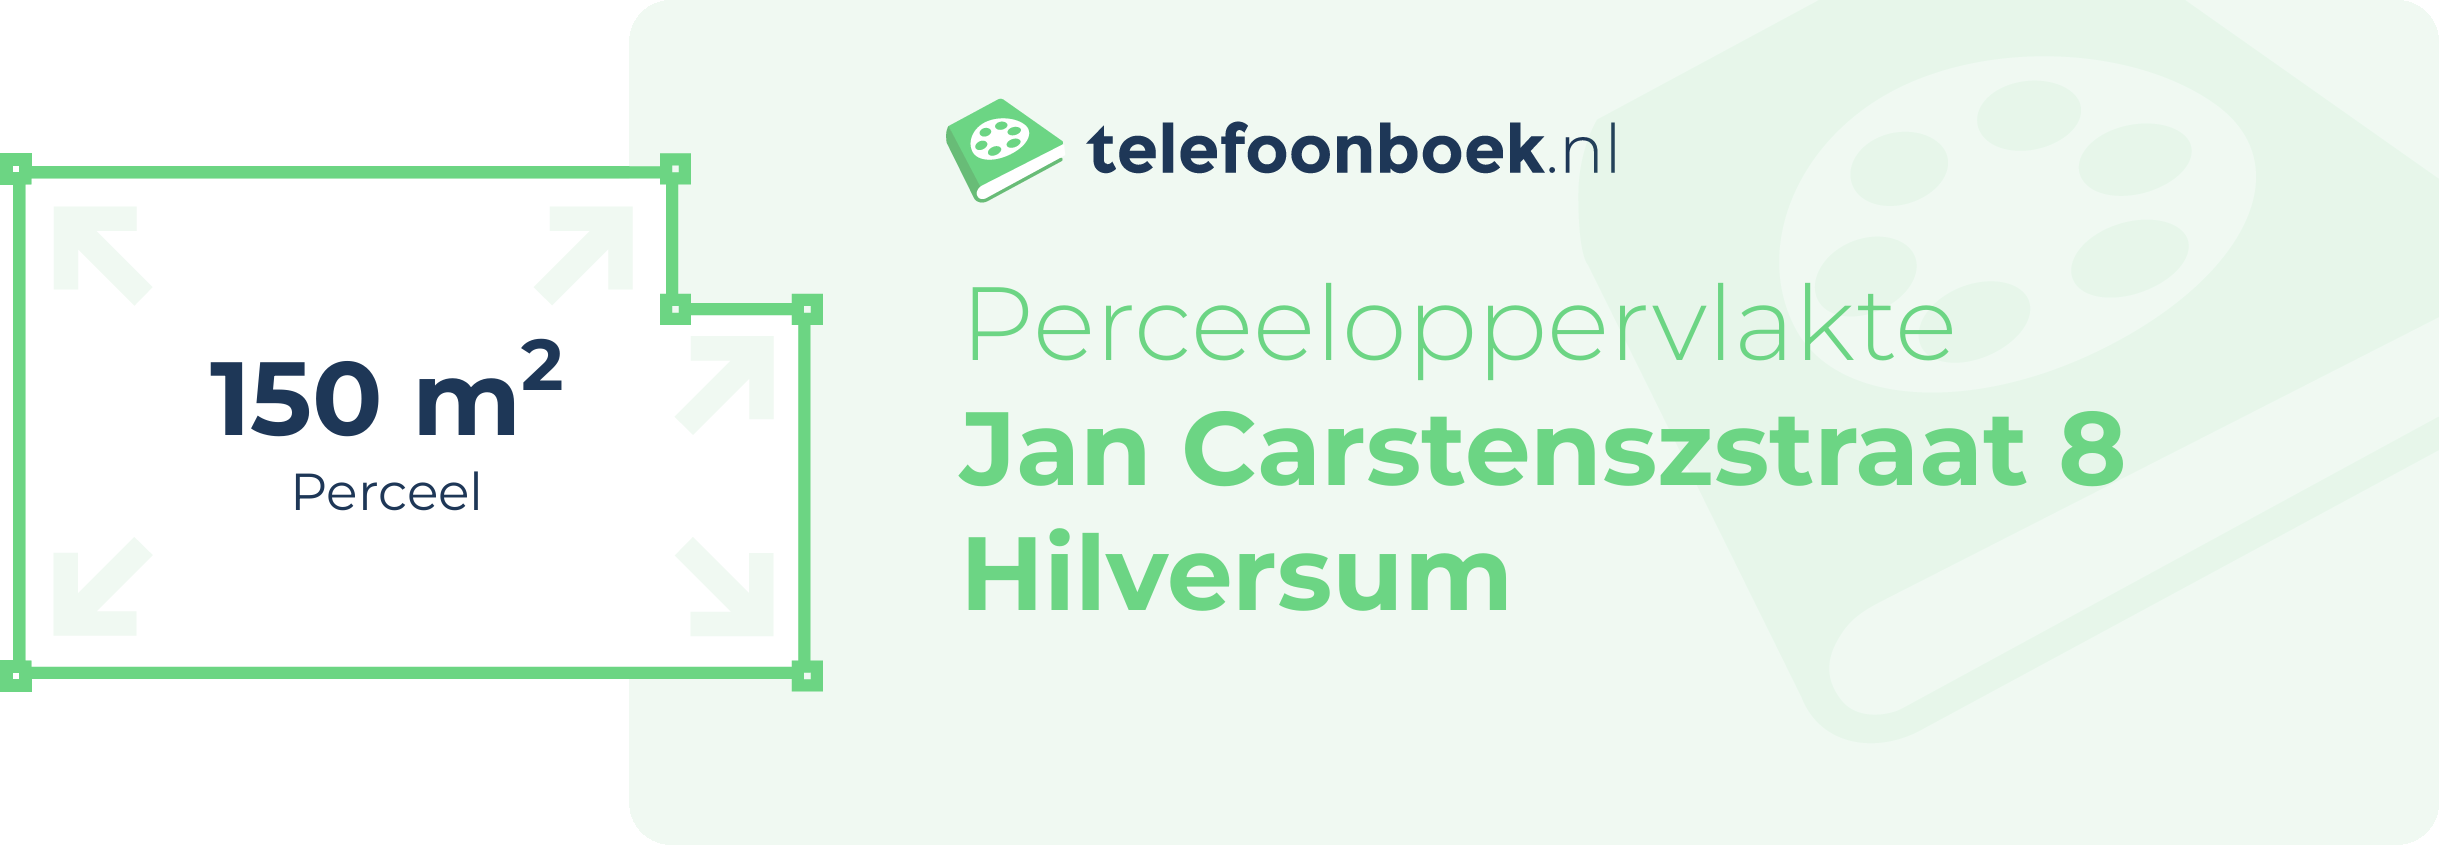 Perceeloppervlakte Jan Carstenszstraat 8 Hilversum